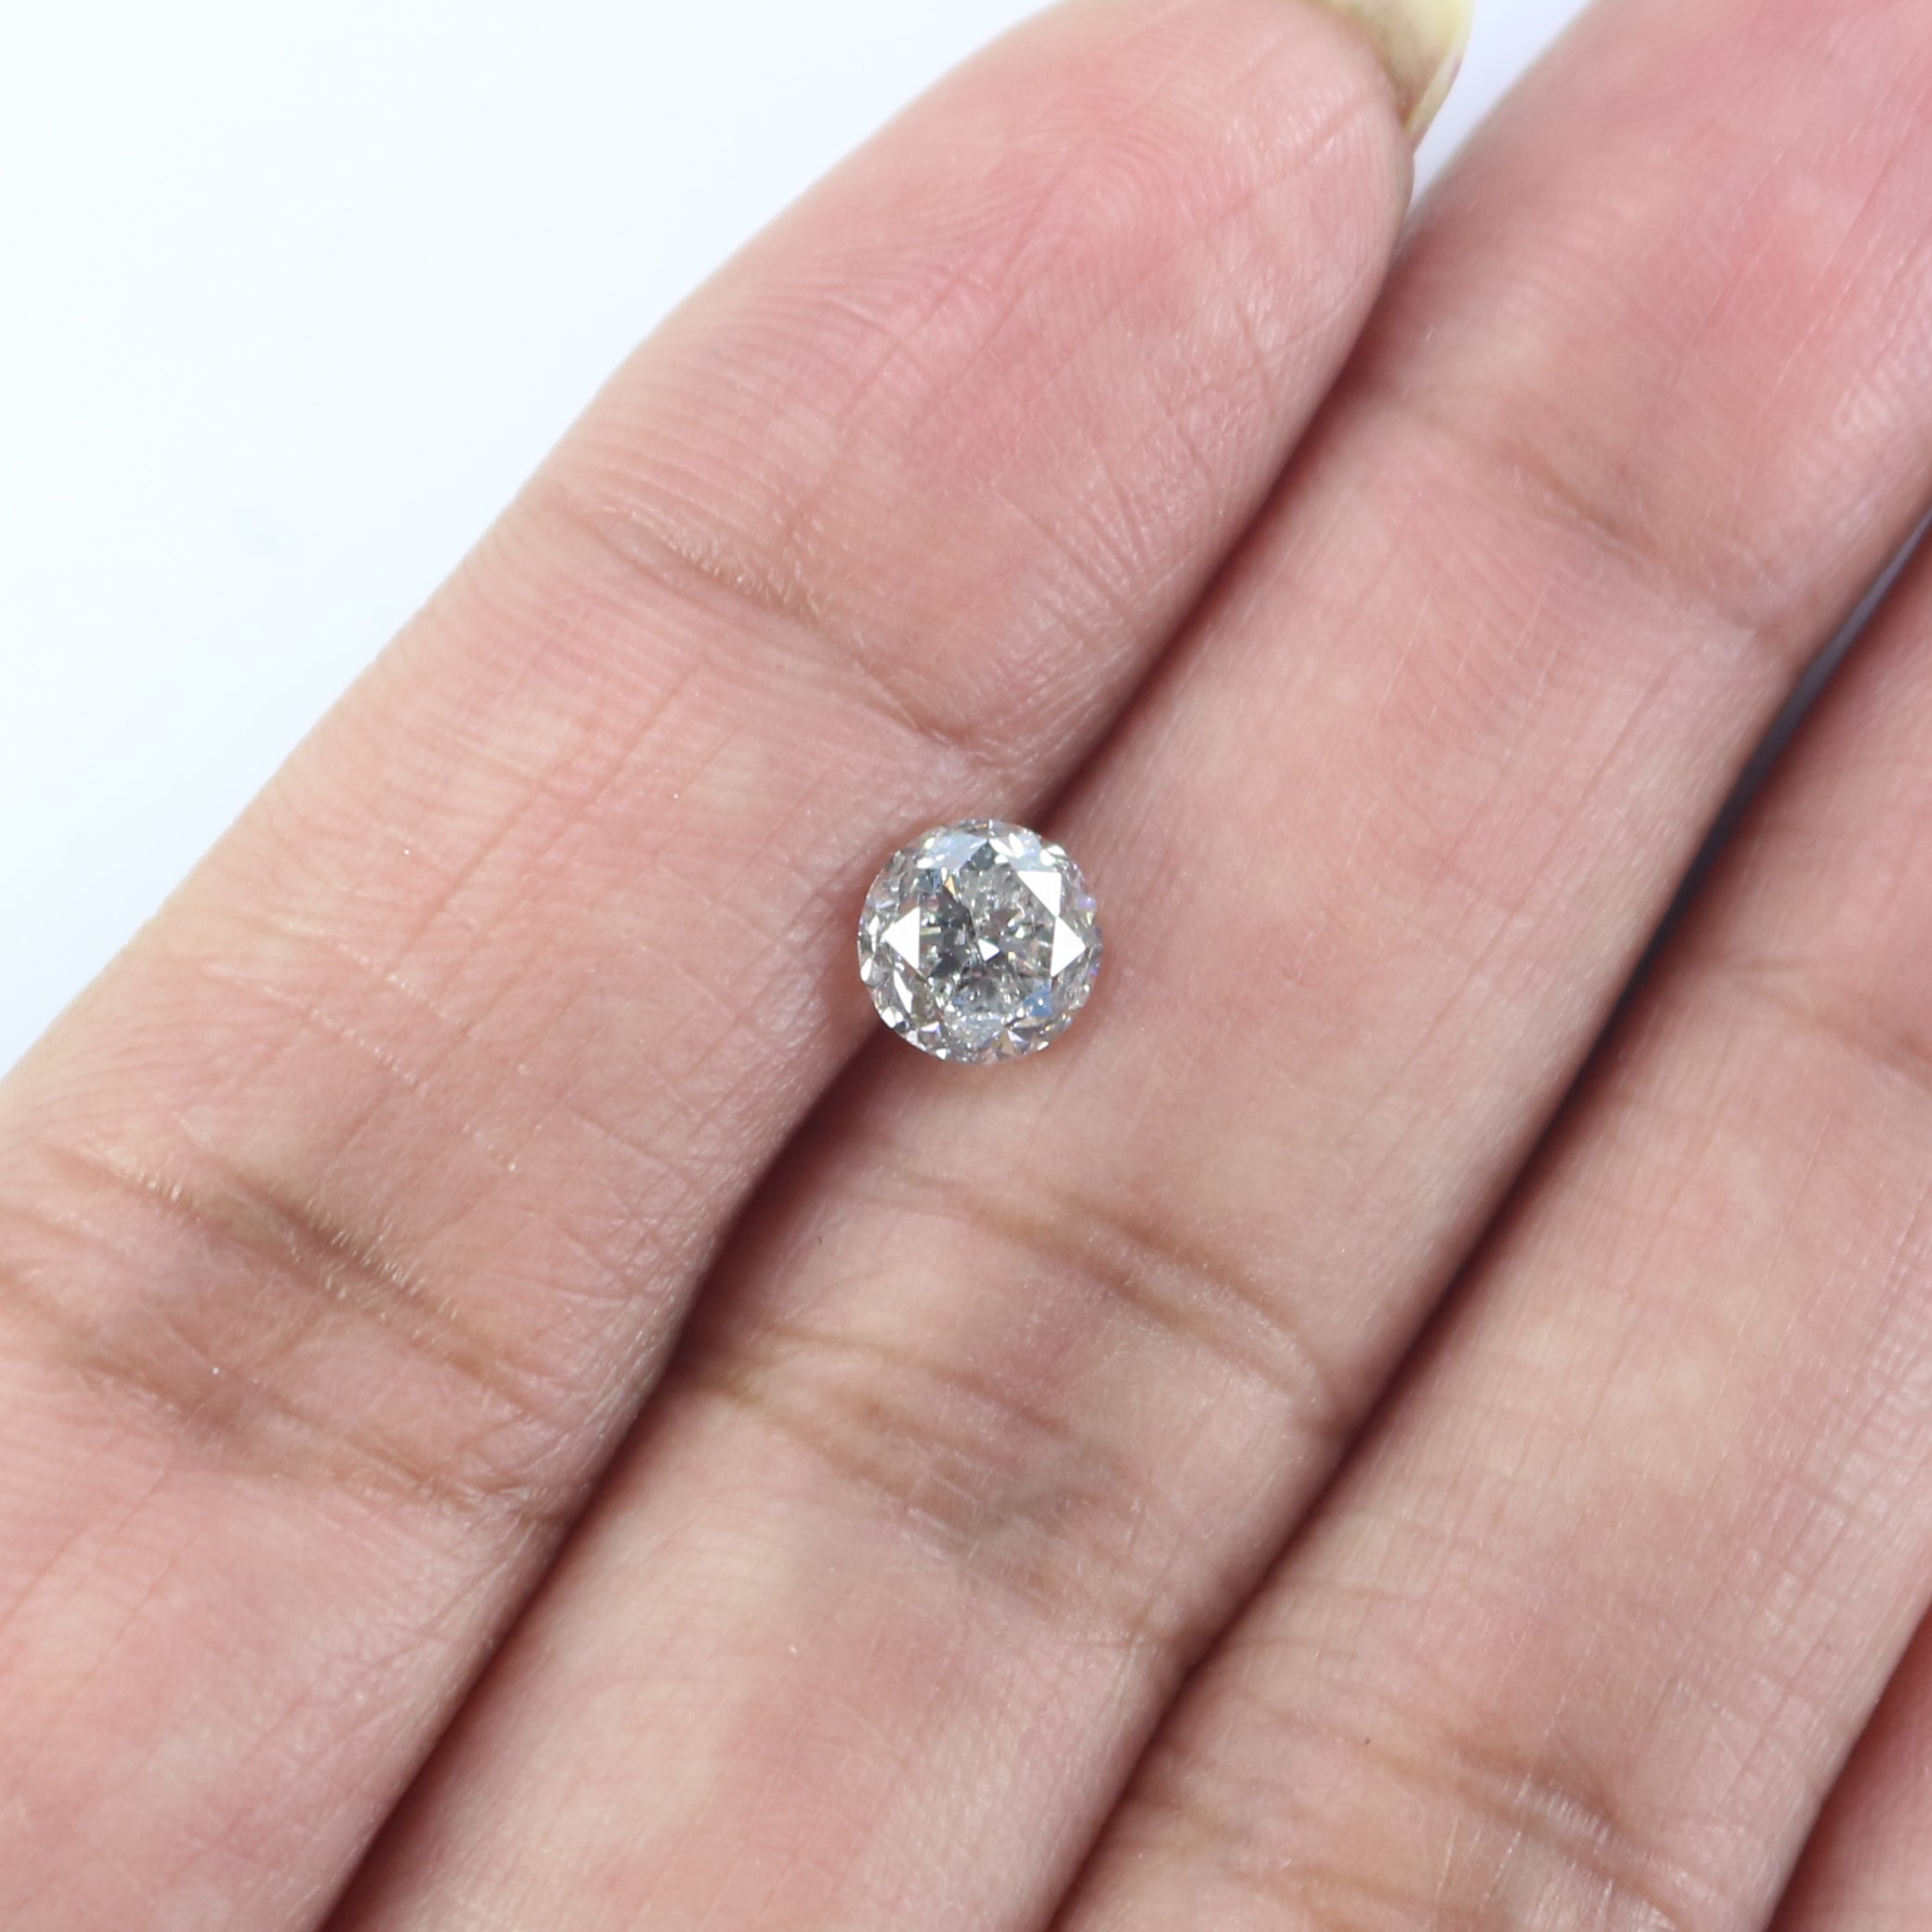 0.84 Ct Natural Loose Round Shape Diamond White - G Color Round Cut Diamond 5.60 MM Natural Loose Diamond Round Brilliant Cut Diamond QL2657